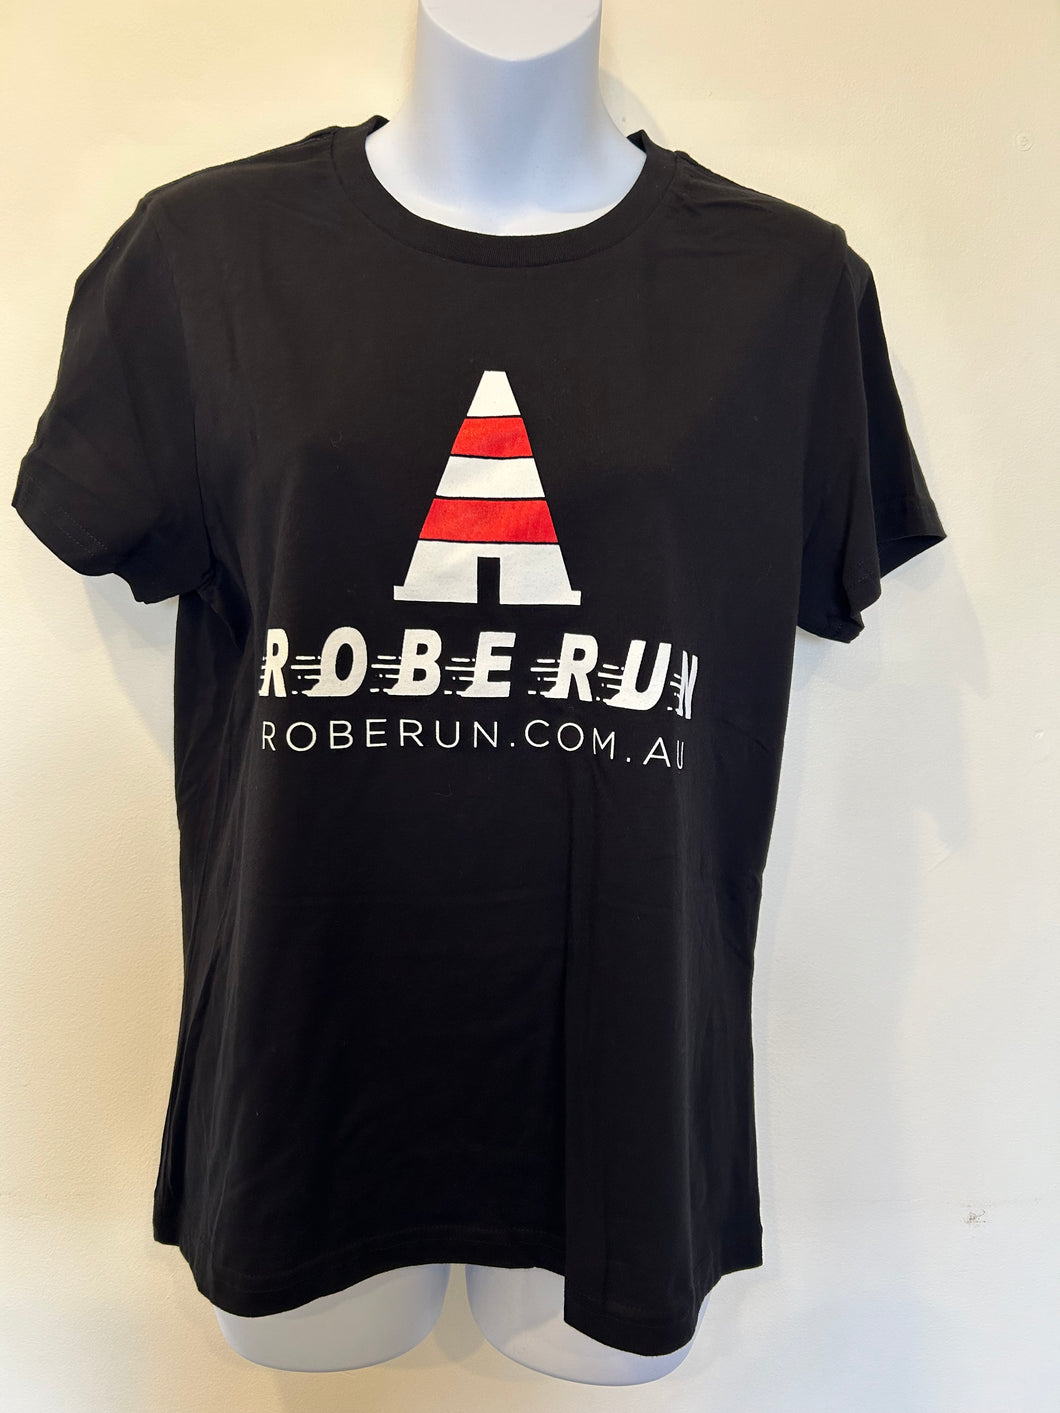 Robe Run Cotton T-Shirt